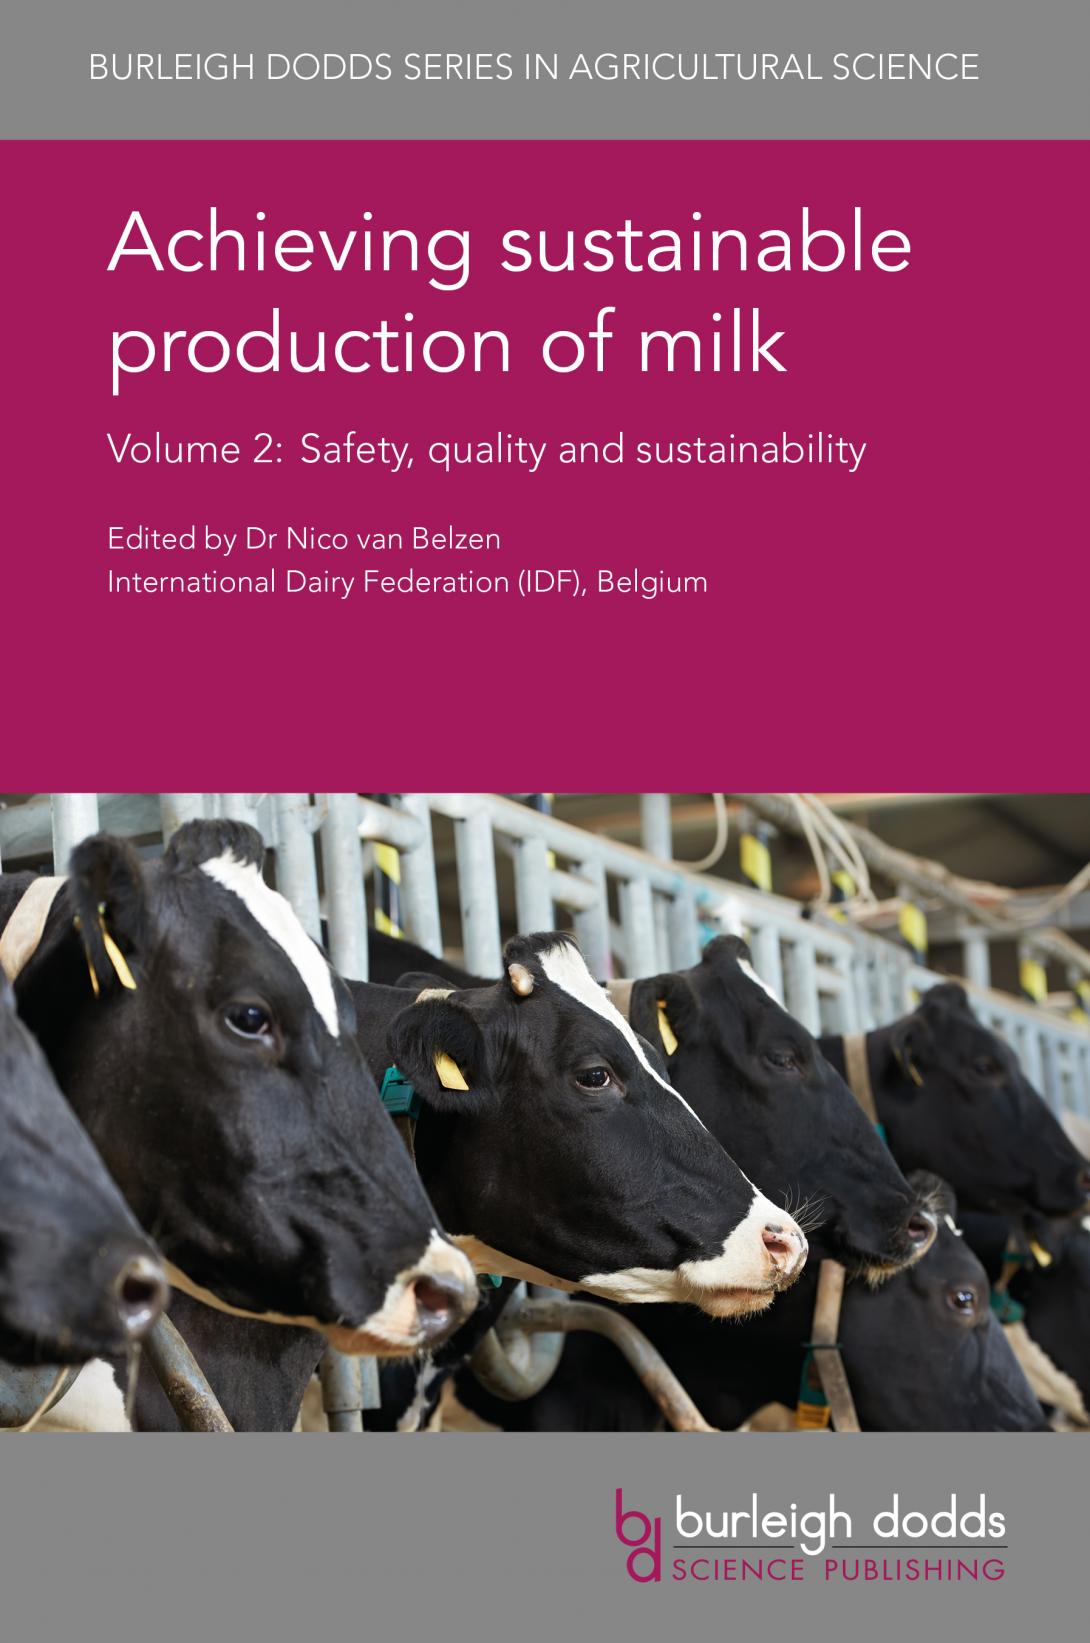 Improving smallholder dairy farming in Africa